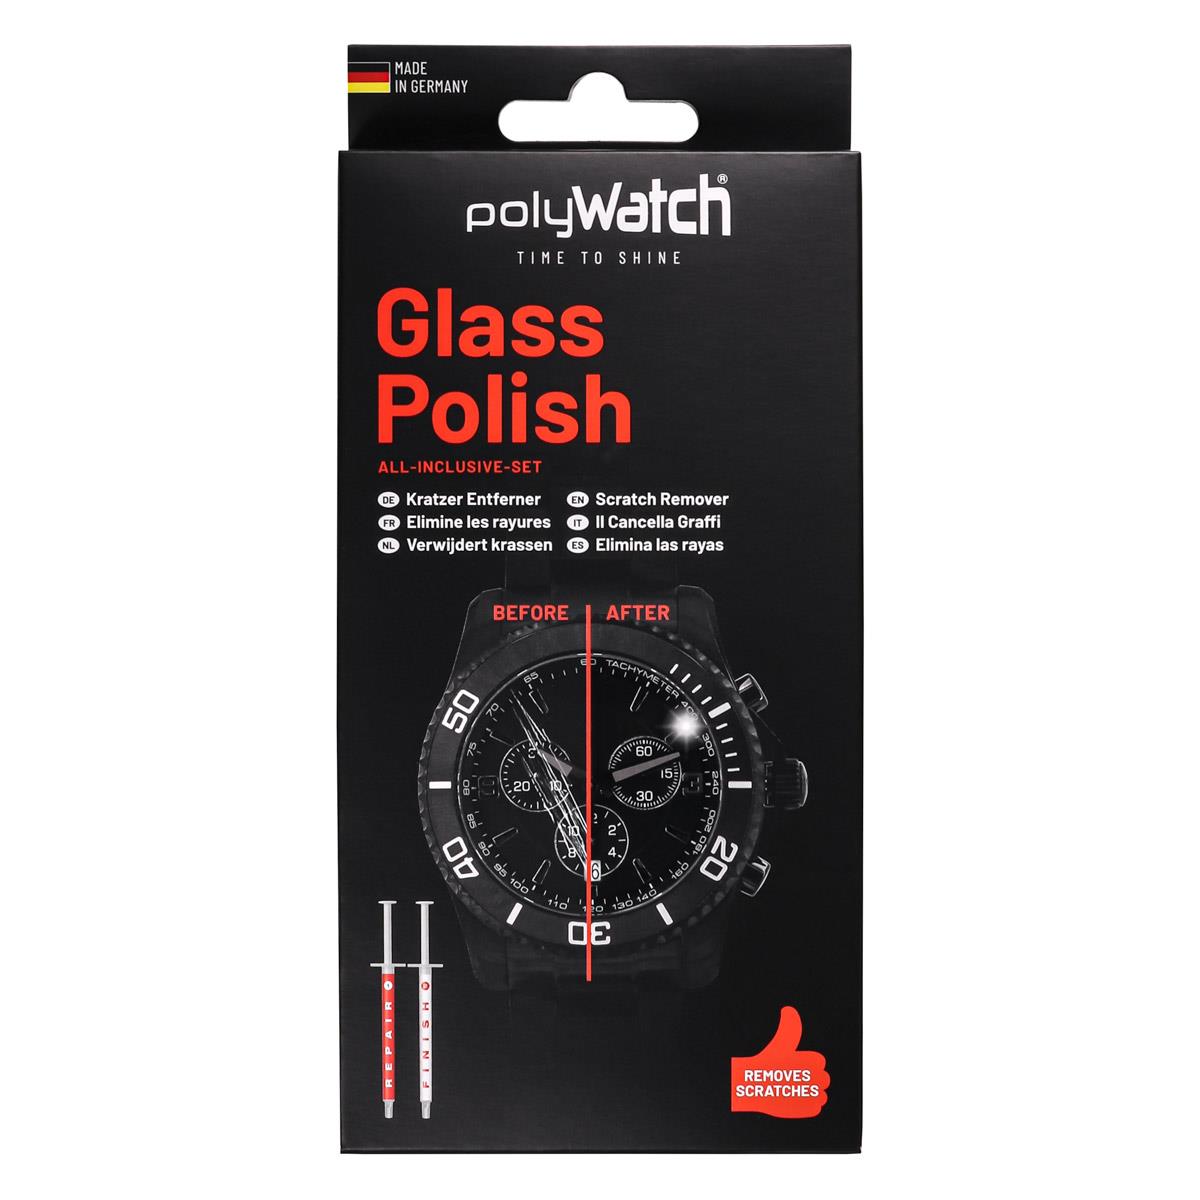 PolyWatch Glass Polish Glass Polish Scratch Remover Nigeria